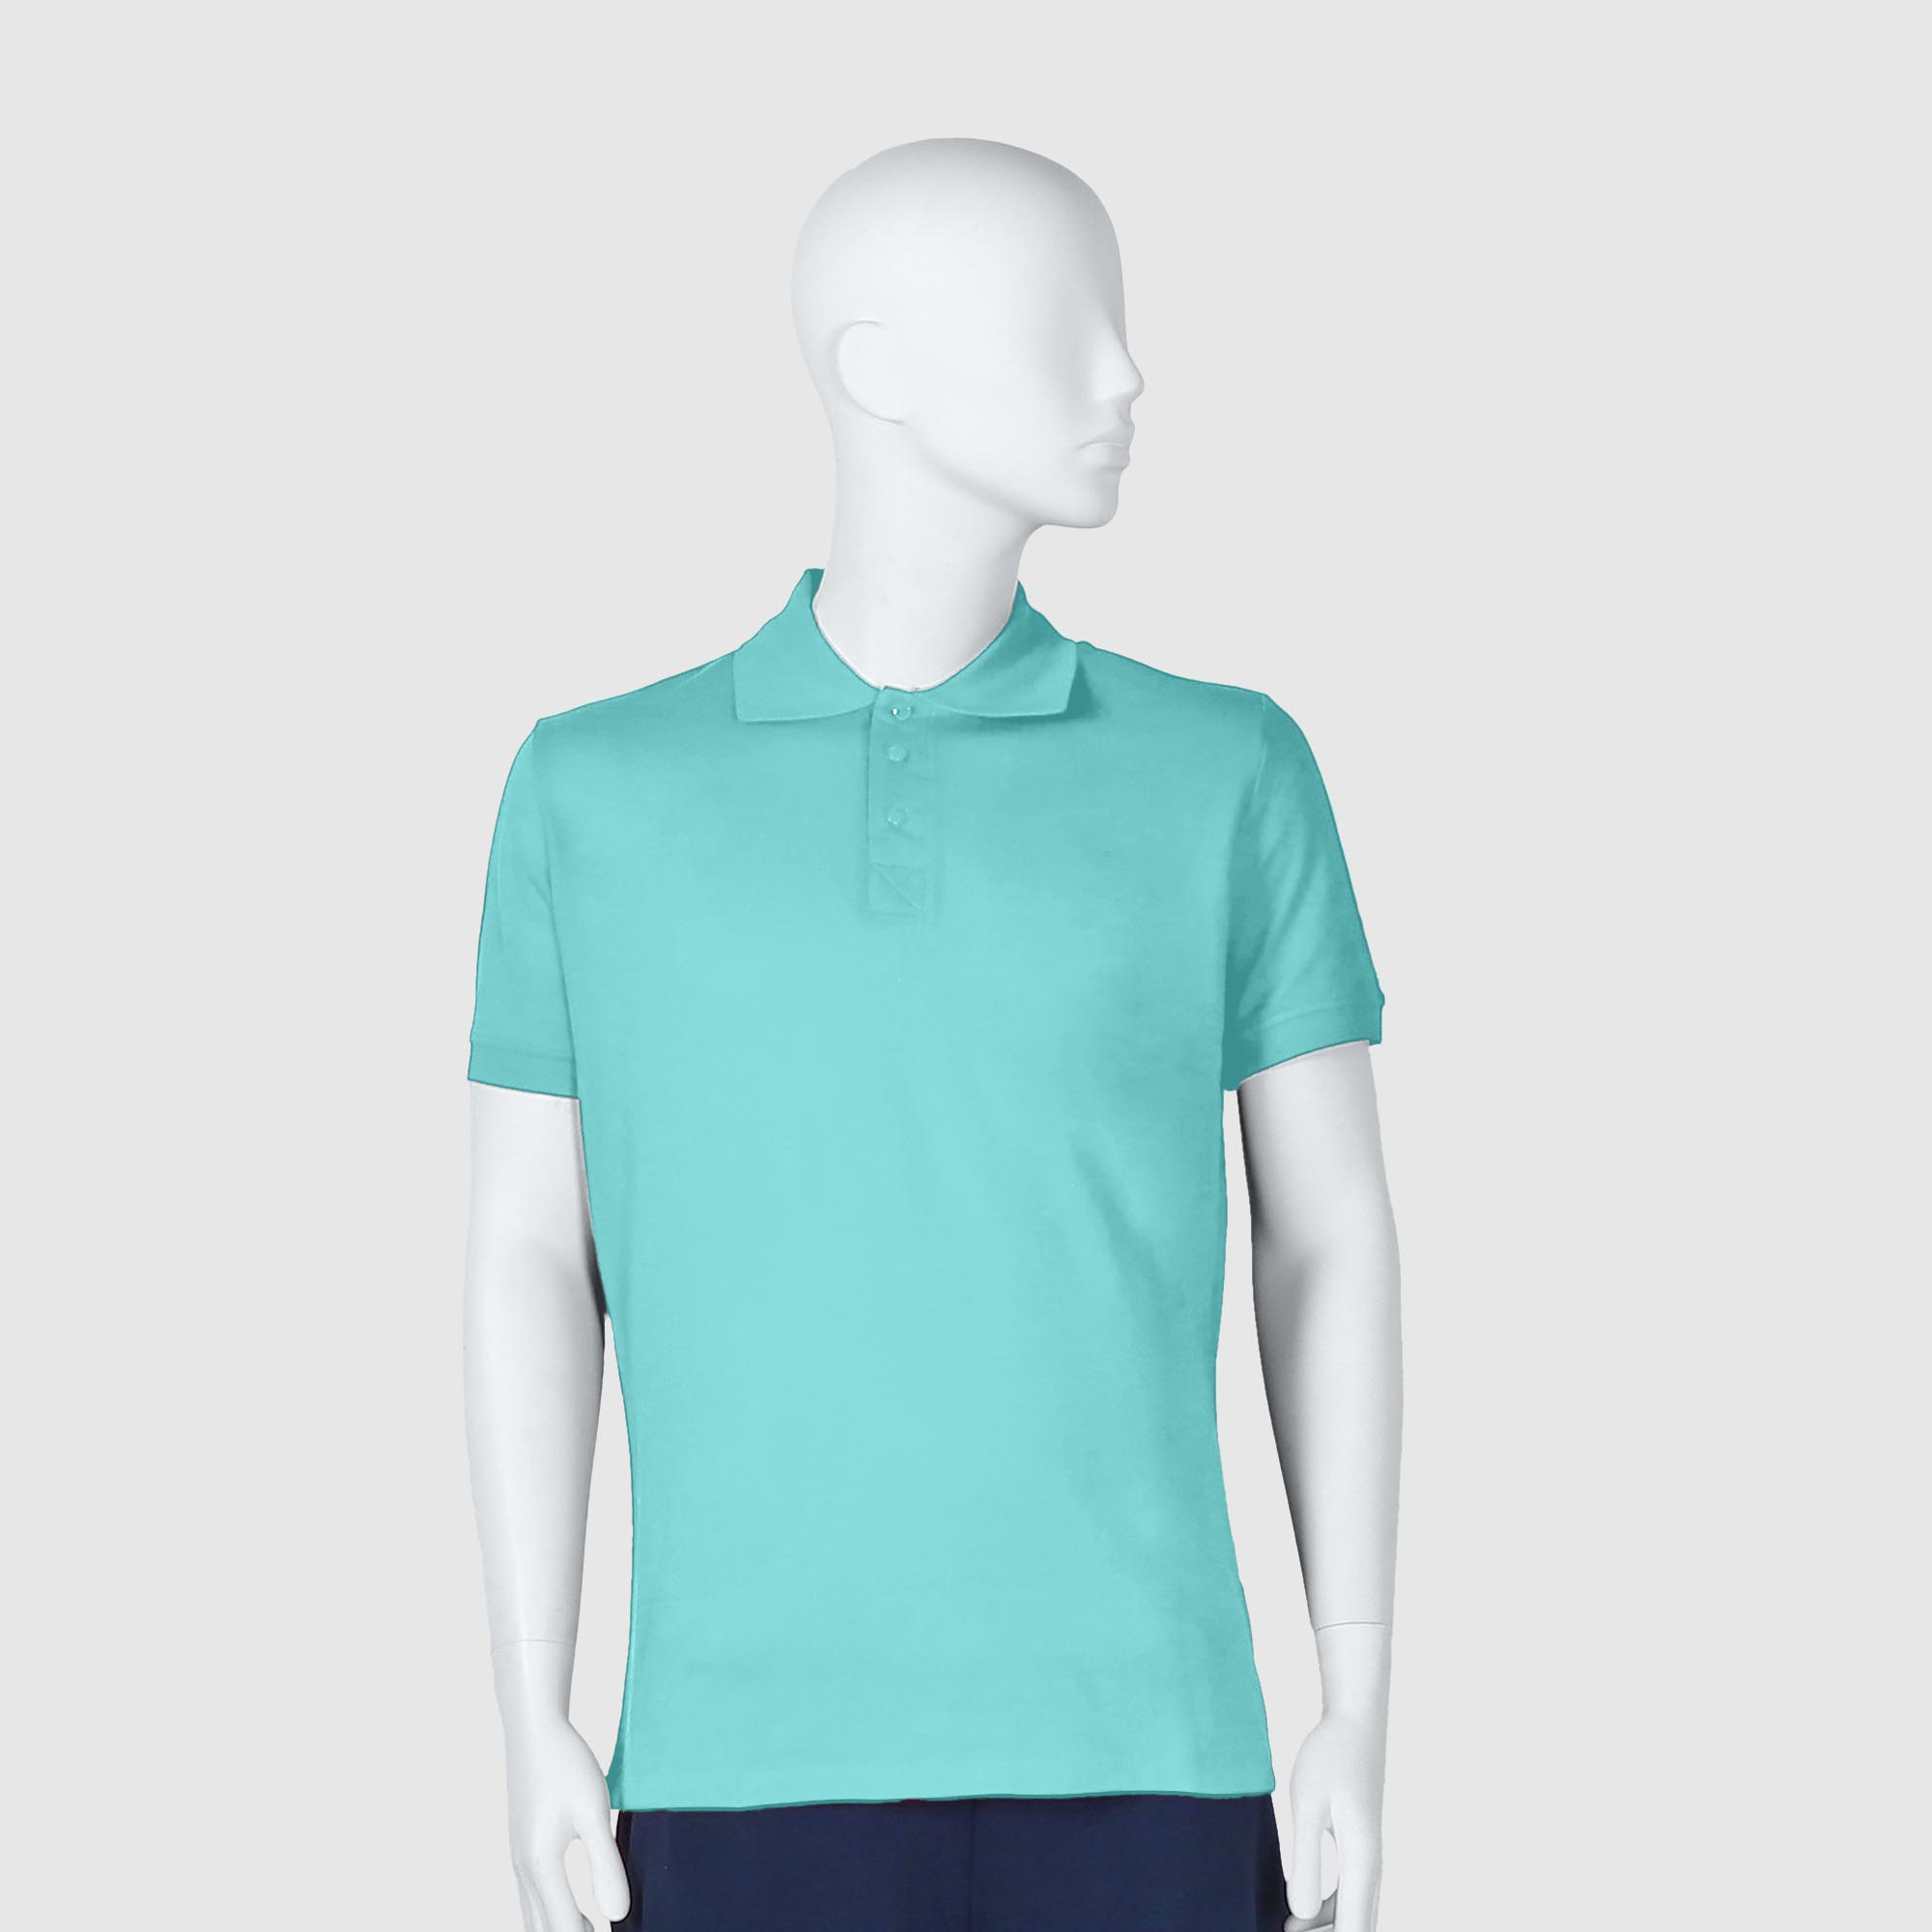 Мужская футболка-поло Diva Teks лазурная (DTD-12), цвет лазурный, размер 44-46 - фото 1